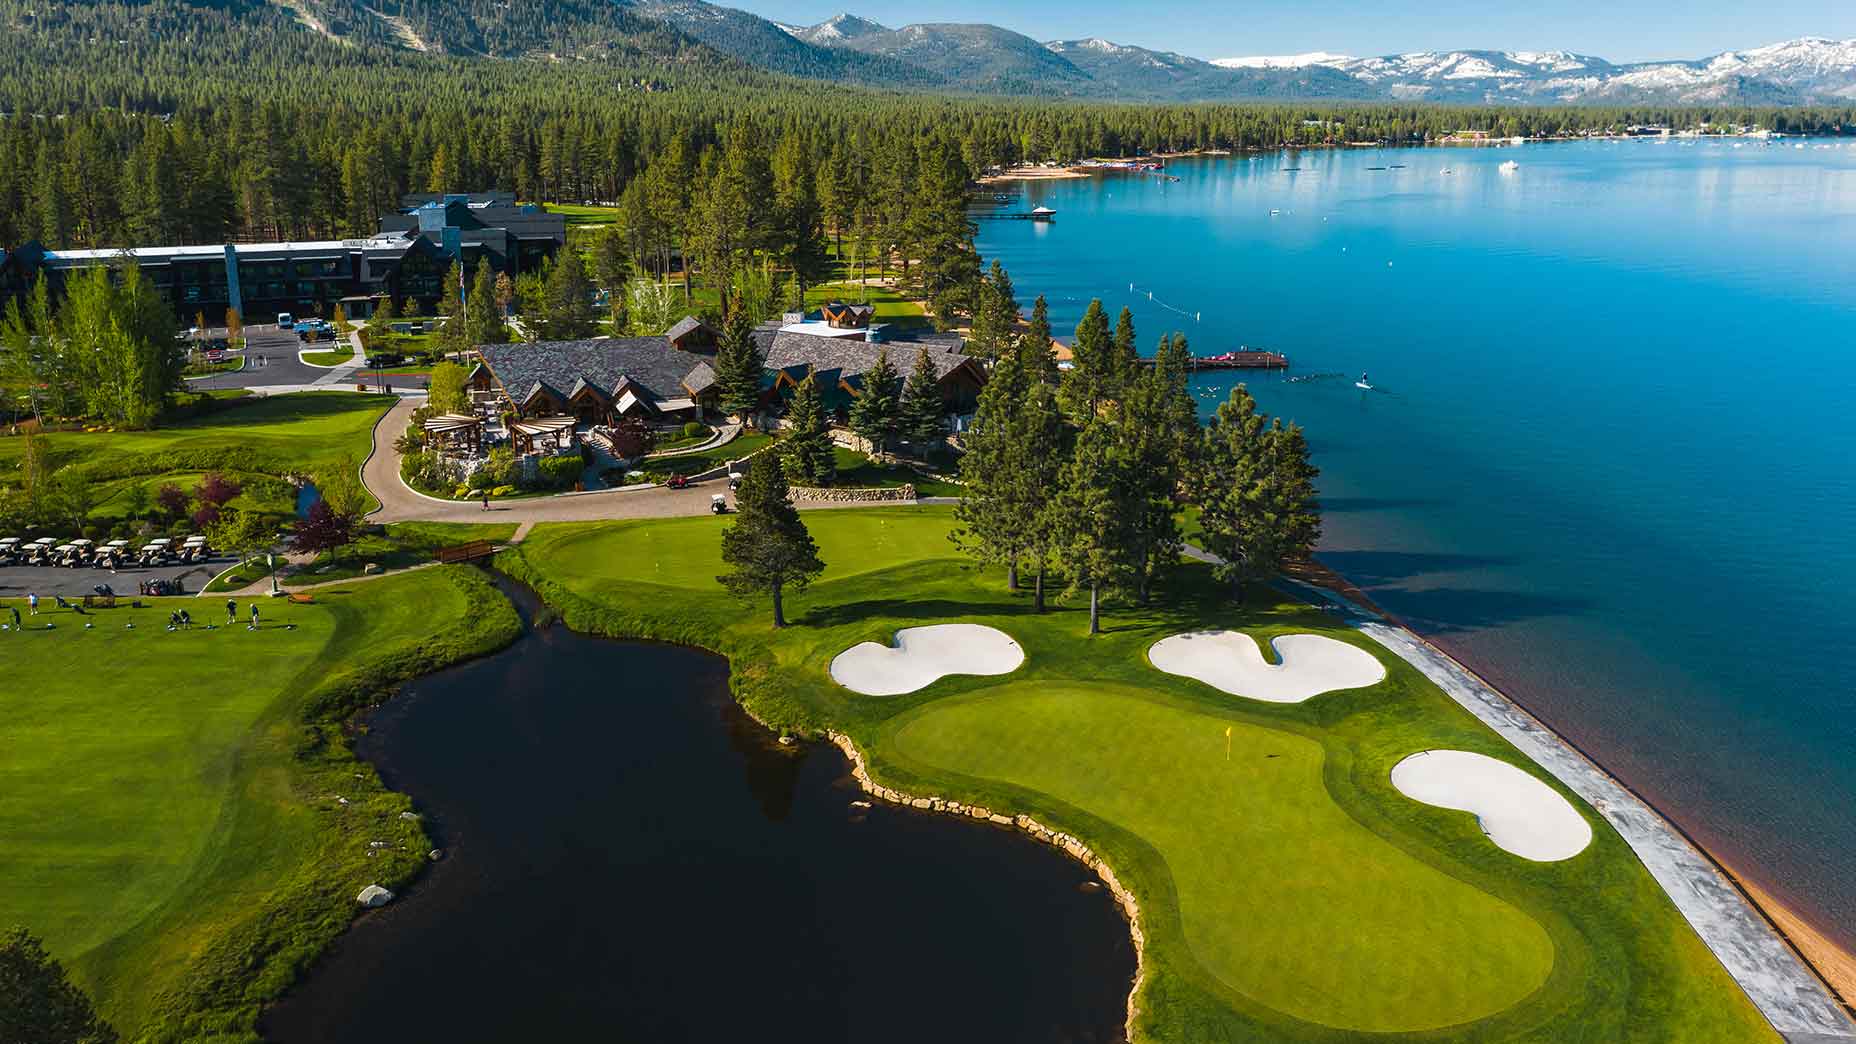 Inside Edgewood Tahoe Resort, home of the American Century Championship